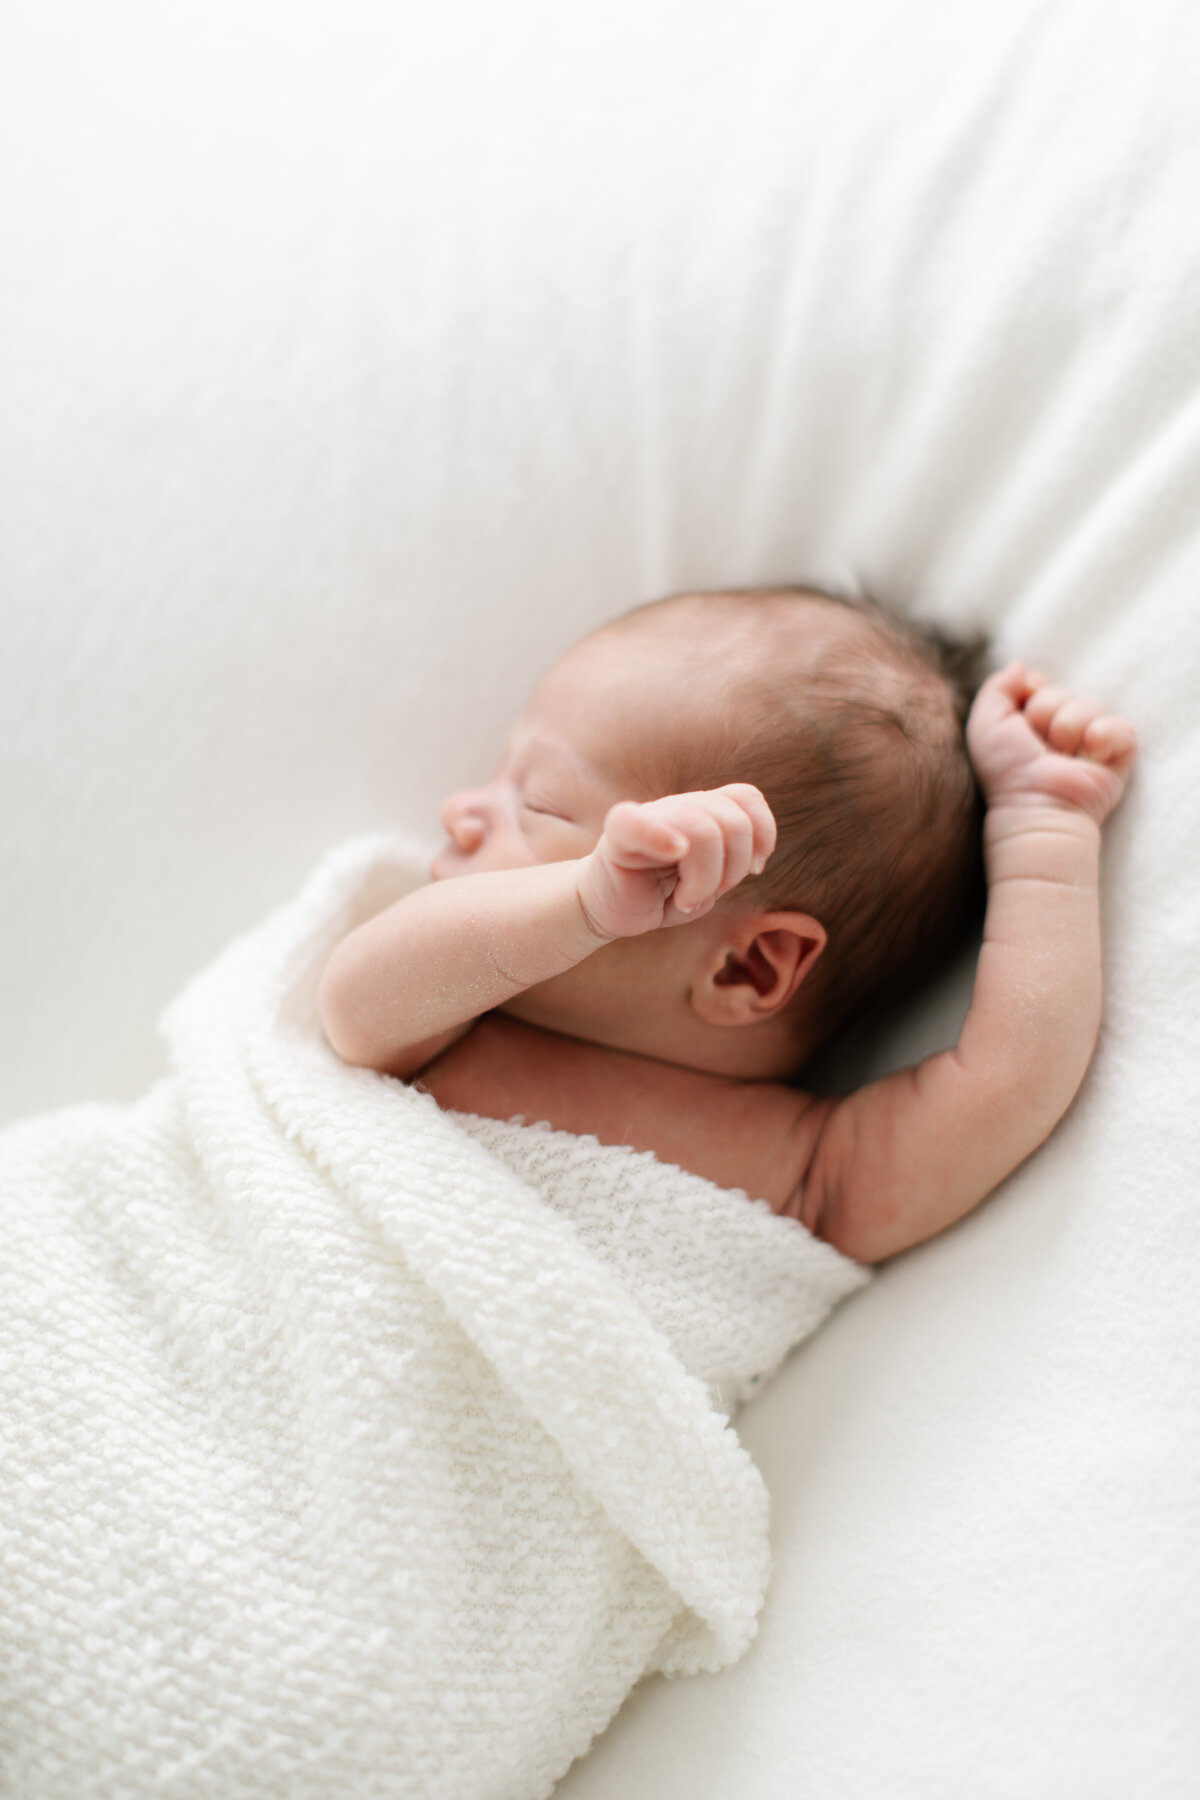 Chicago newborn photographer captures simple and organic portrait